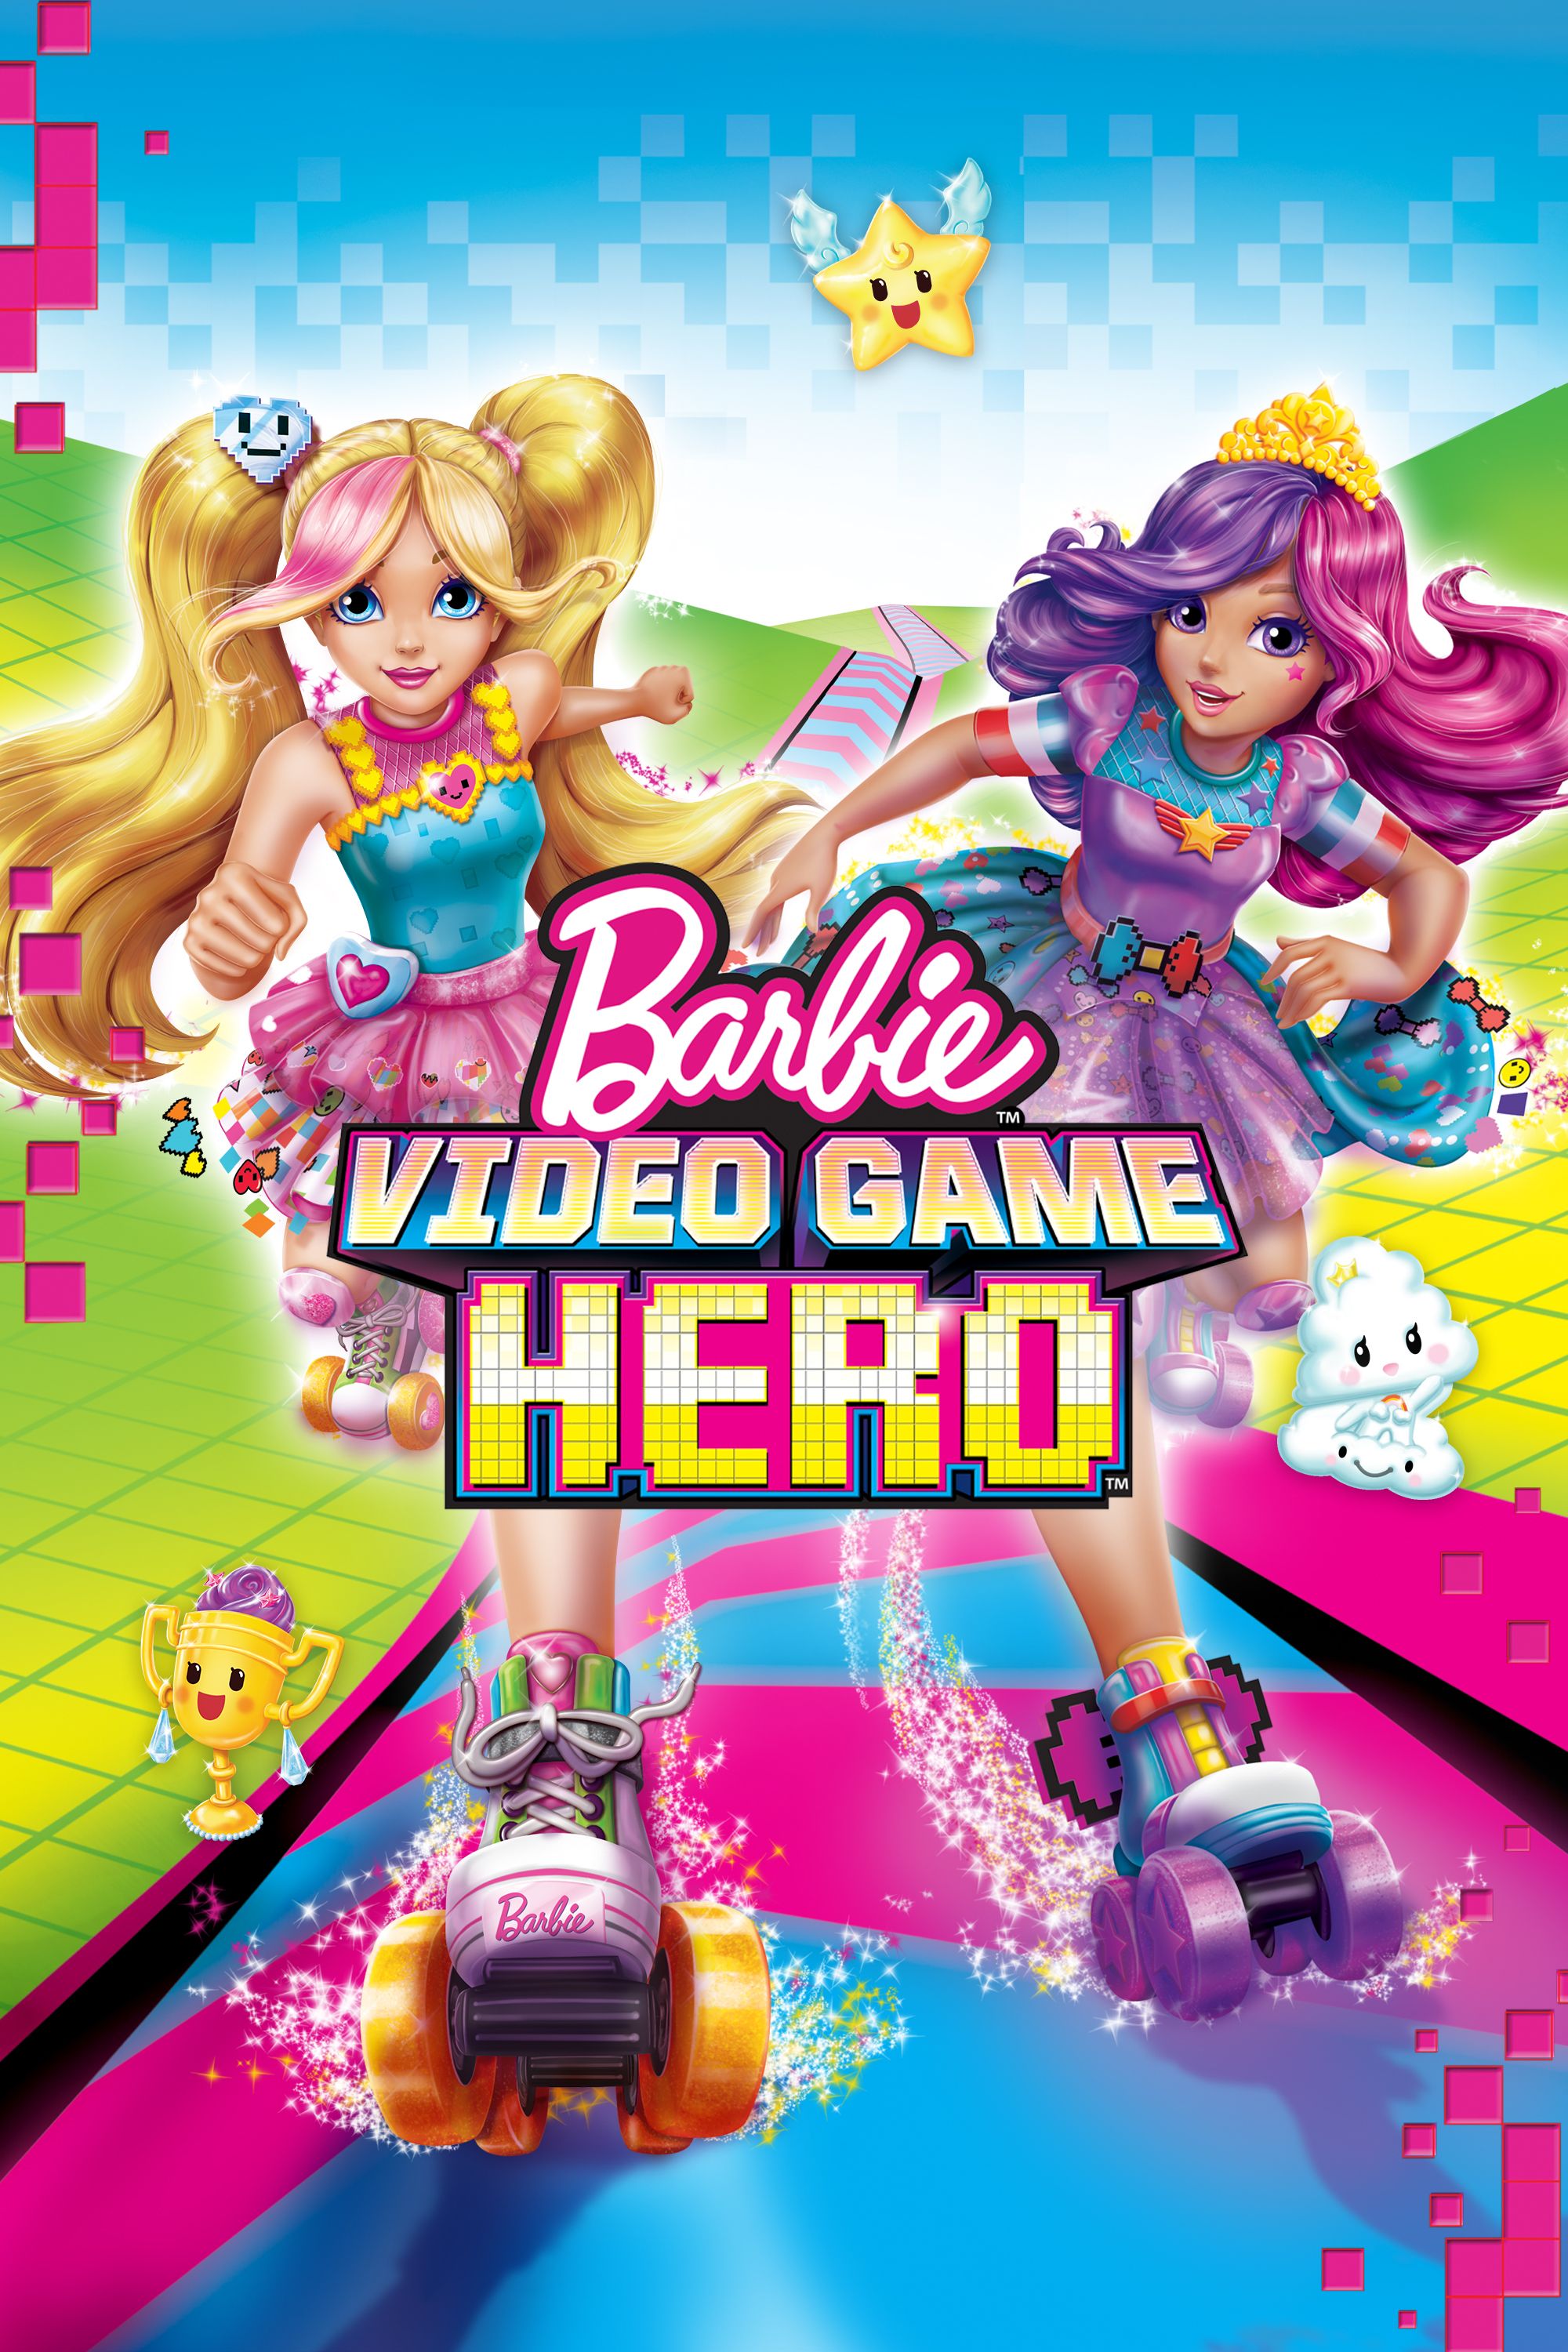 Barbie - Películas Animadas (2001-2023) [1080p] (Colección)